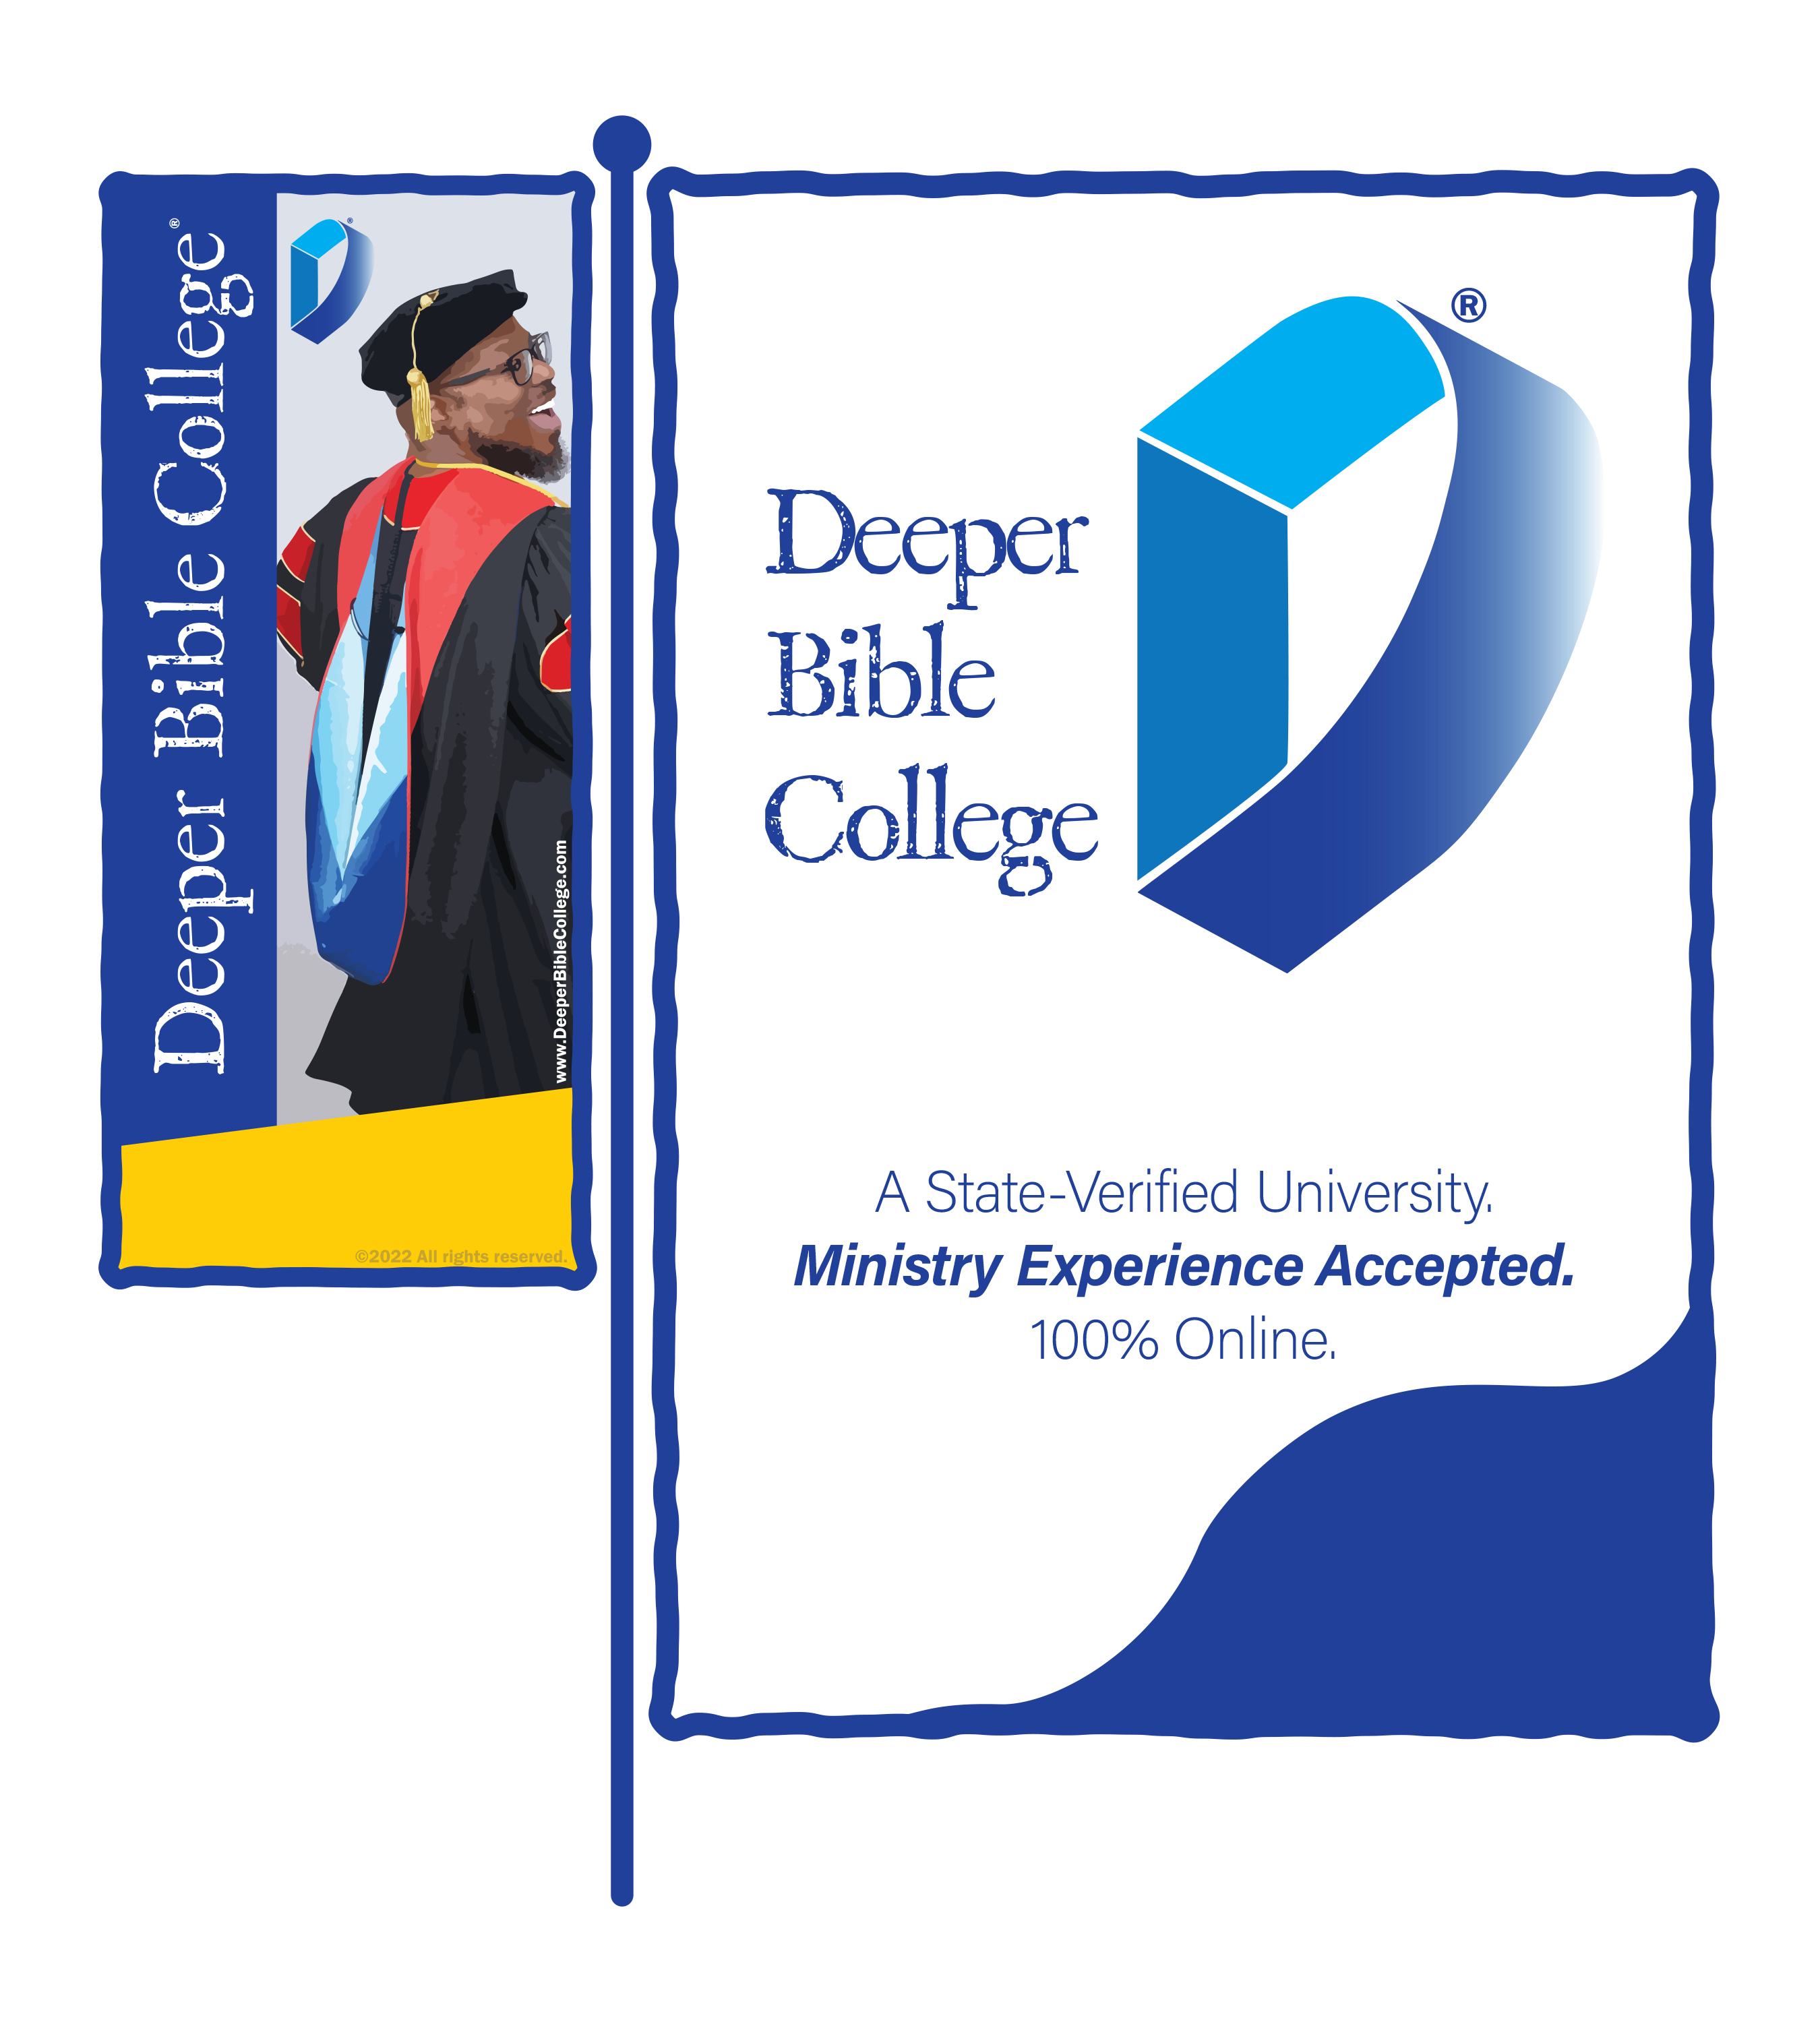 Deeper Bible College